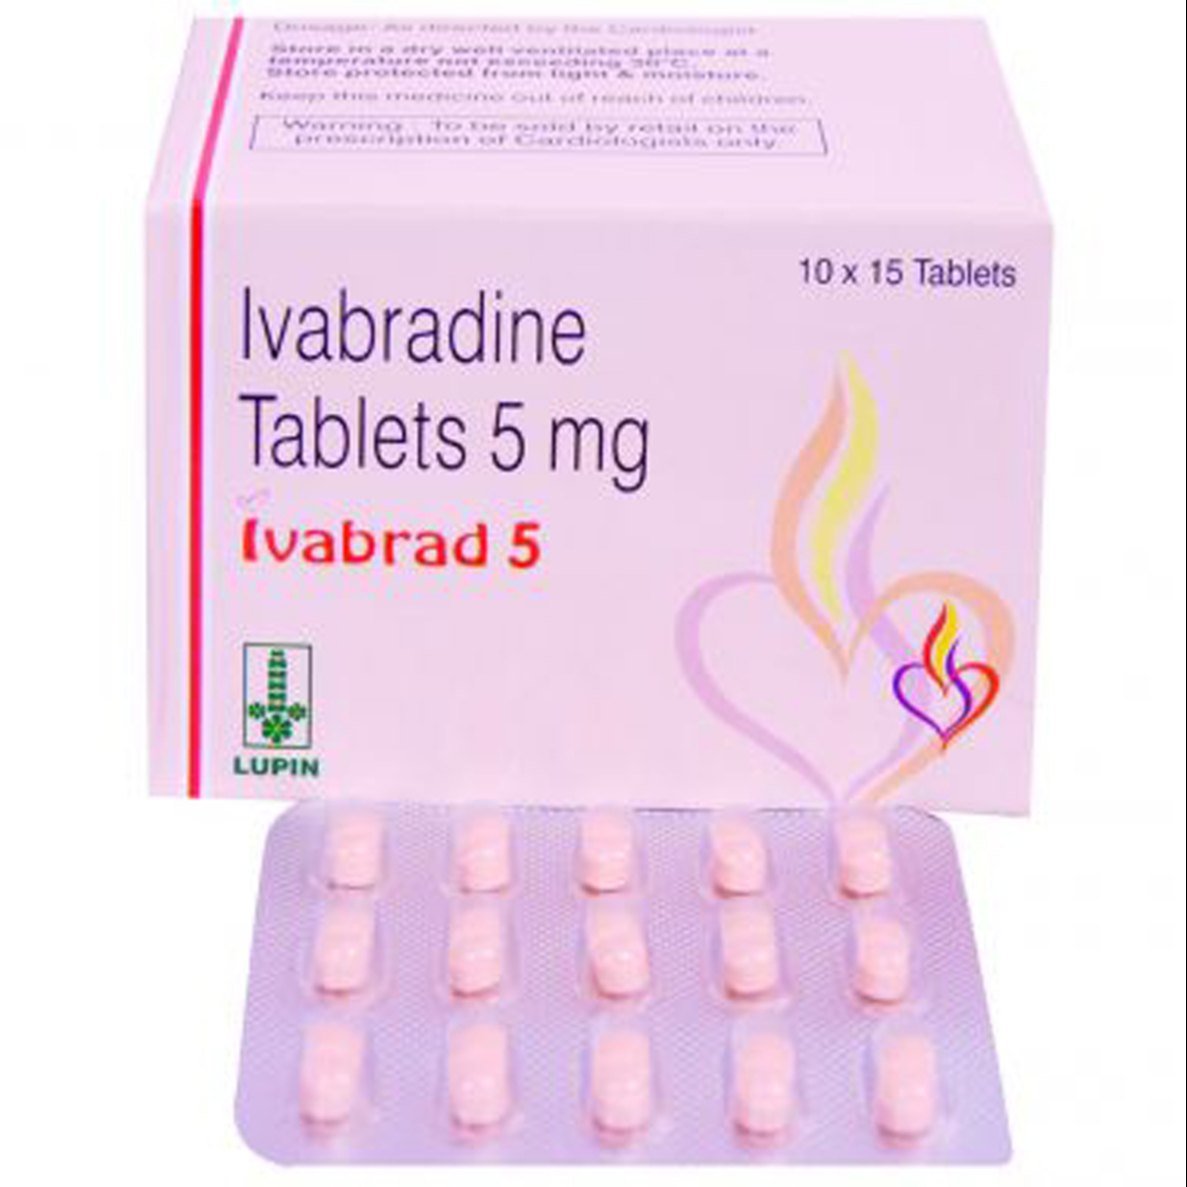 ivabrad-5-tablet